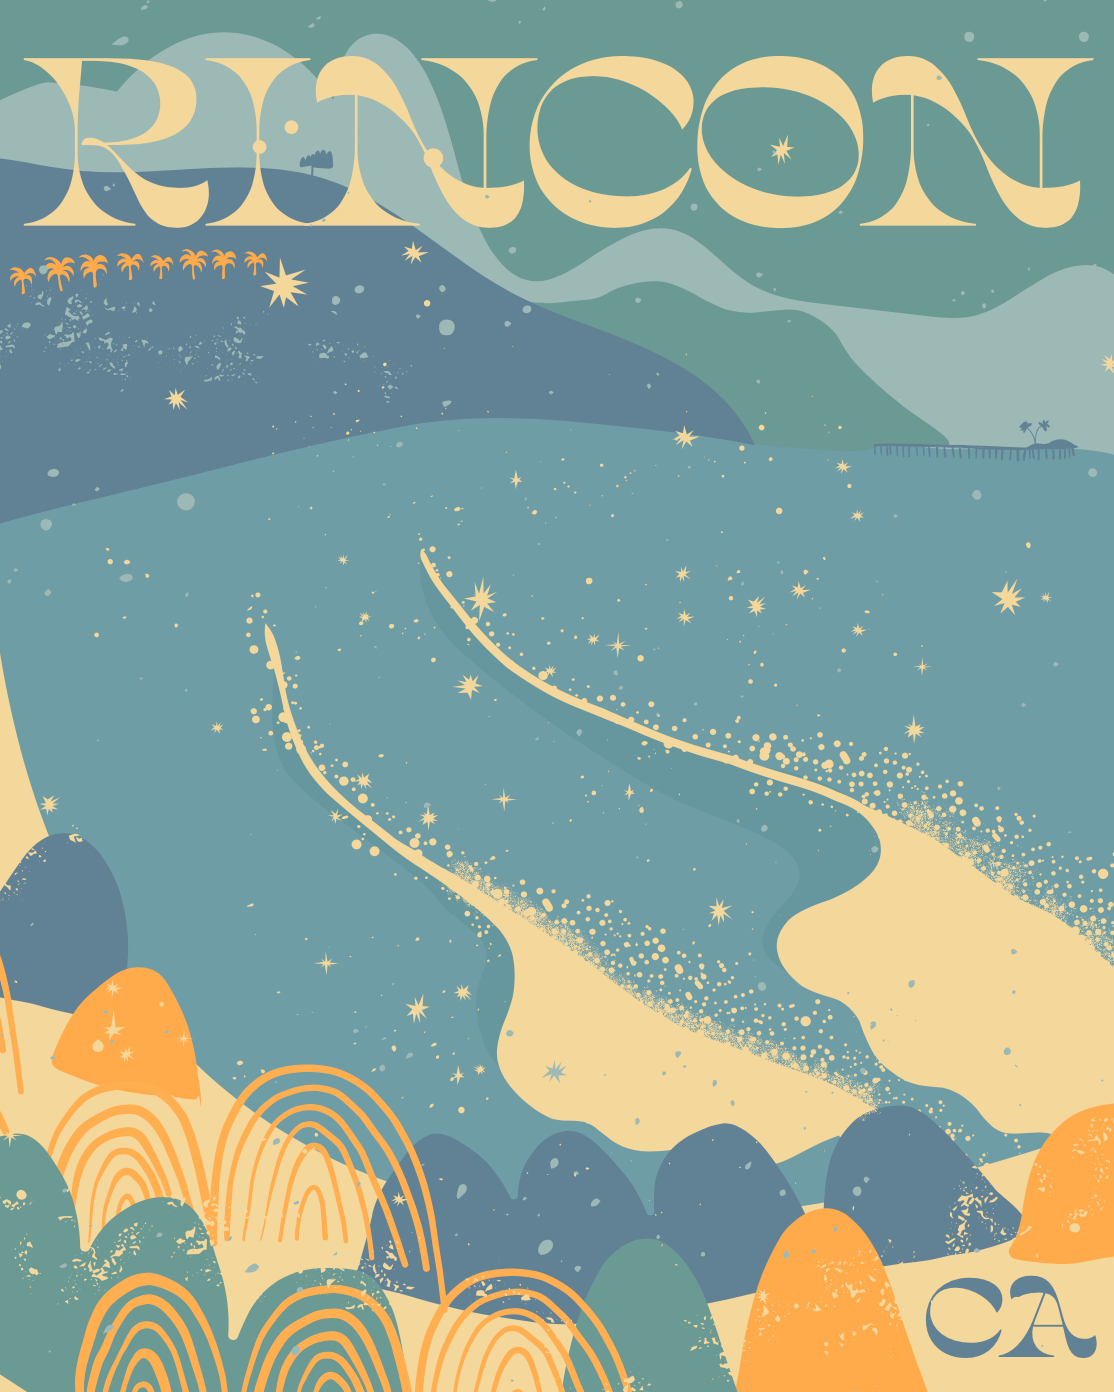 Rincon Carpinteria California Surf Poster Art Print